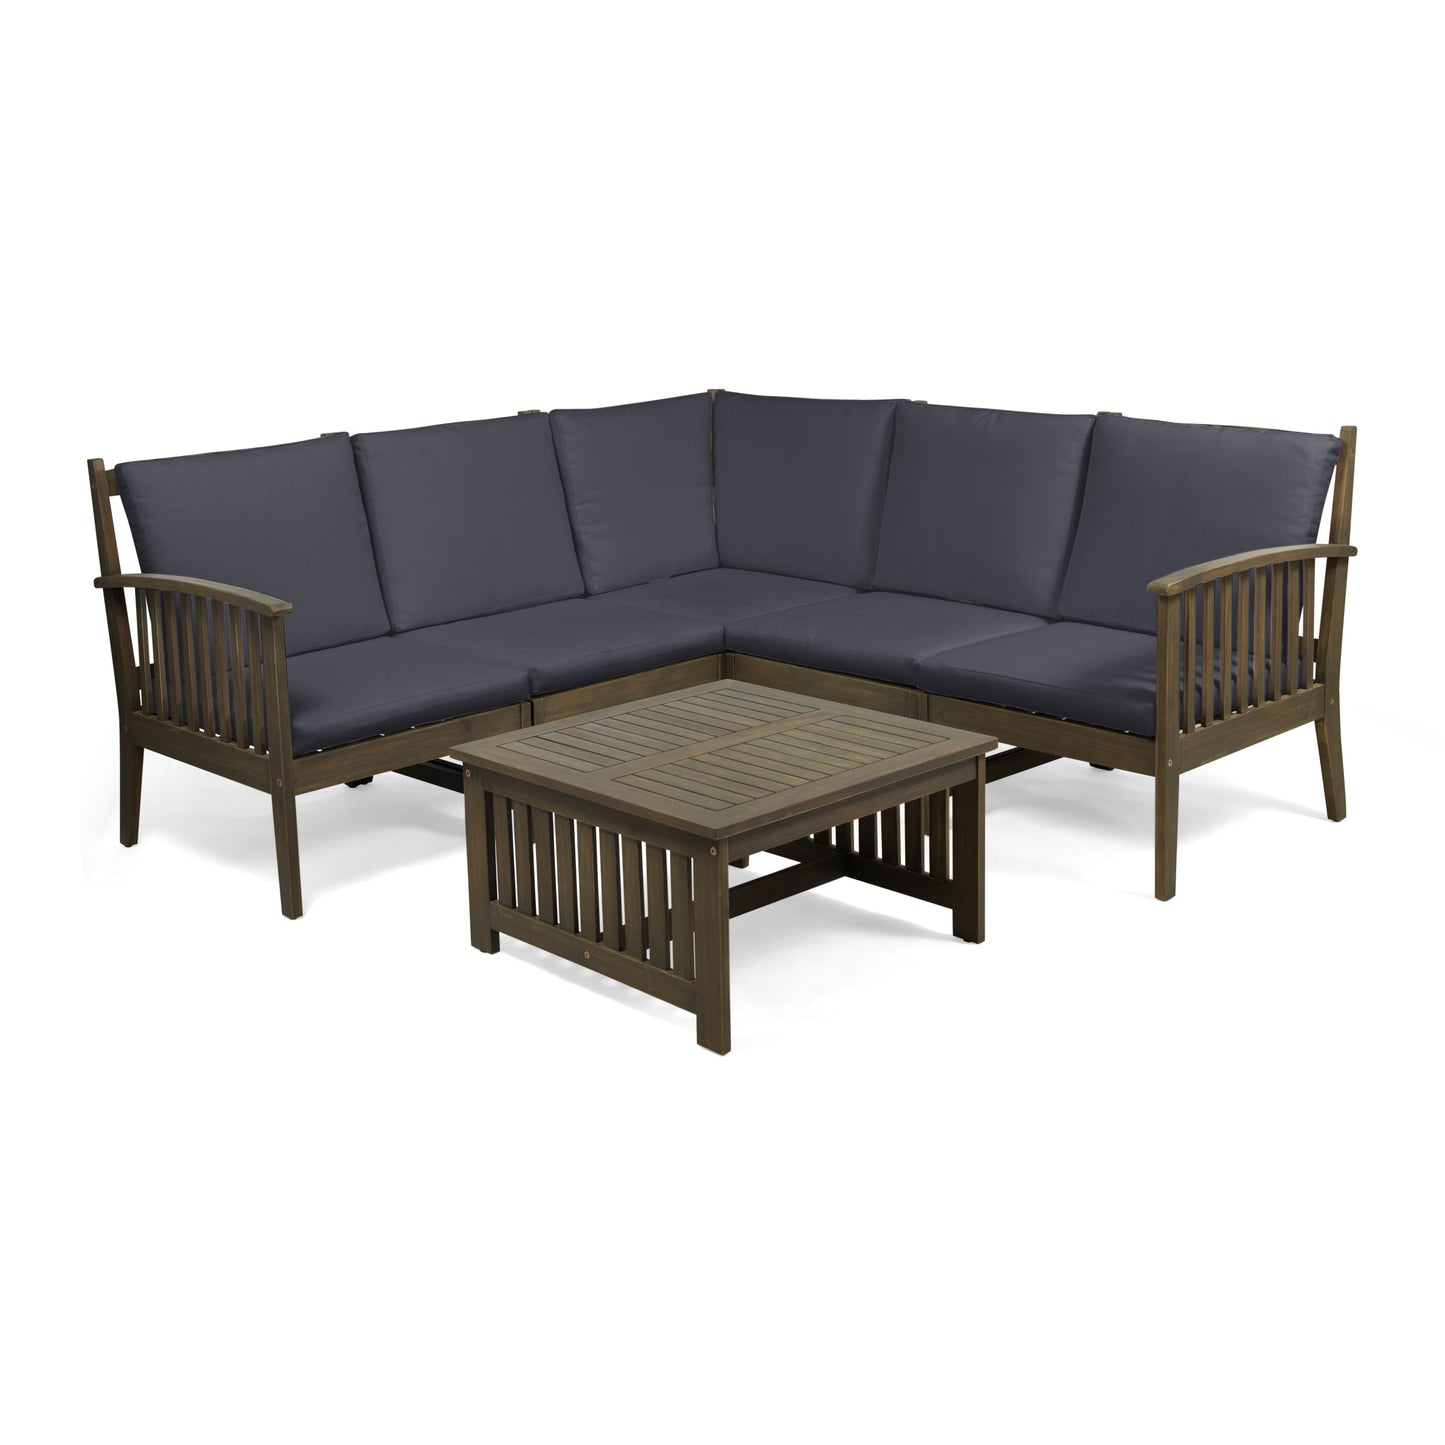 Maud Outdoor 5 Seater Acacia Wood Sofa Sectional Set